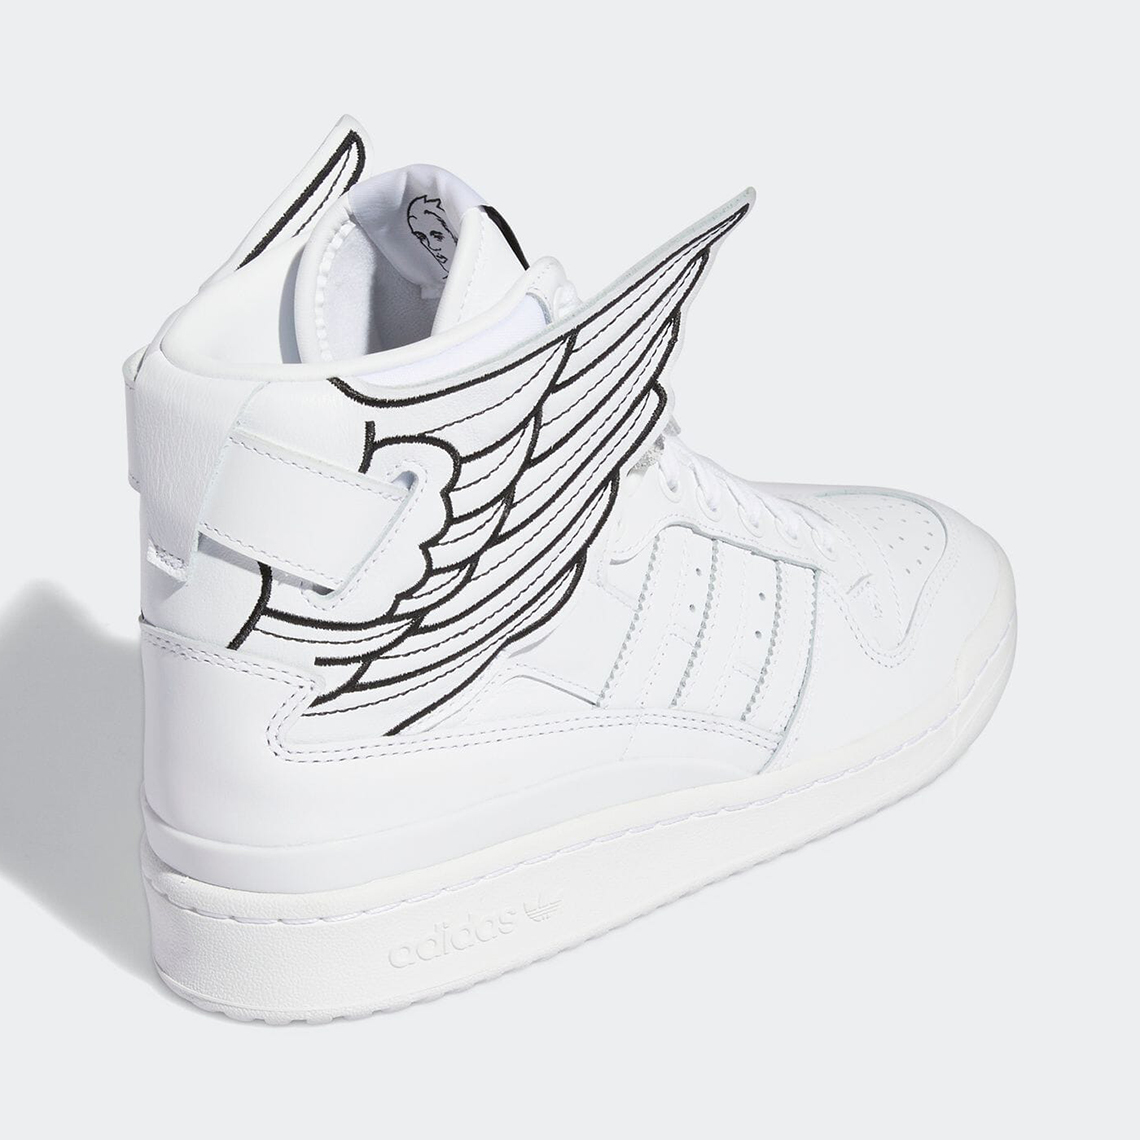 Jeremy Scott Adidas Forum Wings 4 0 White Black Gx9445 4